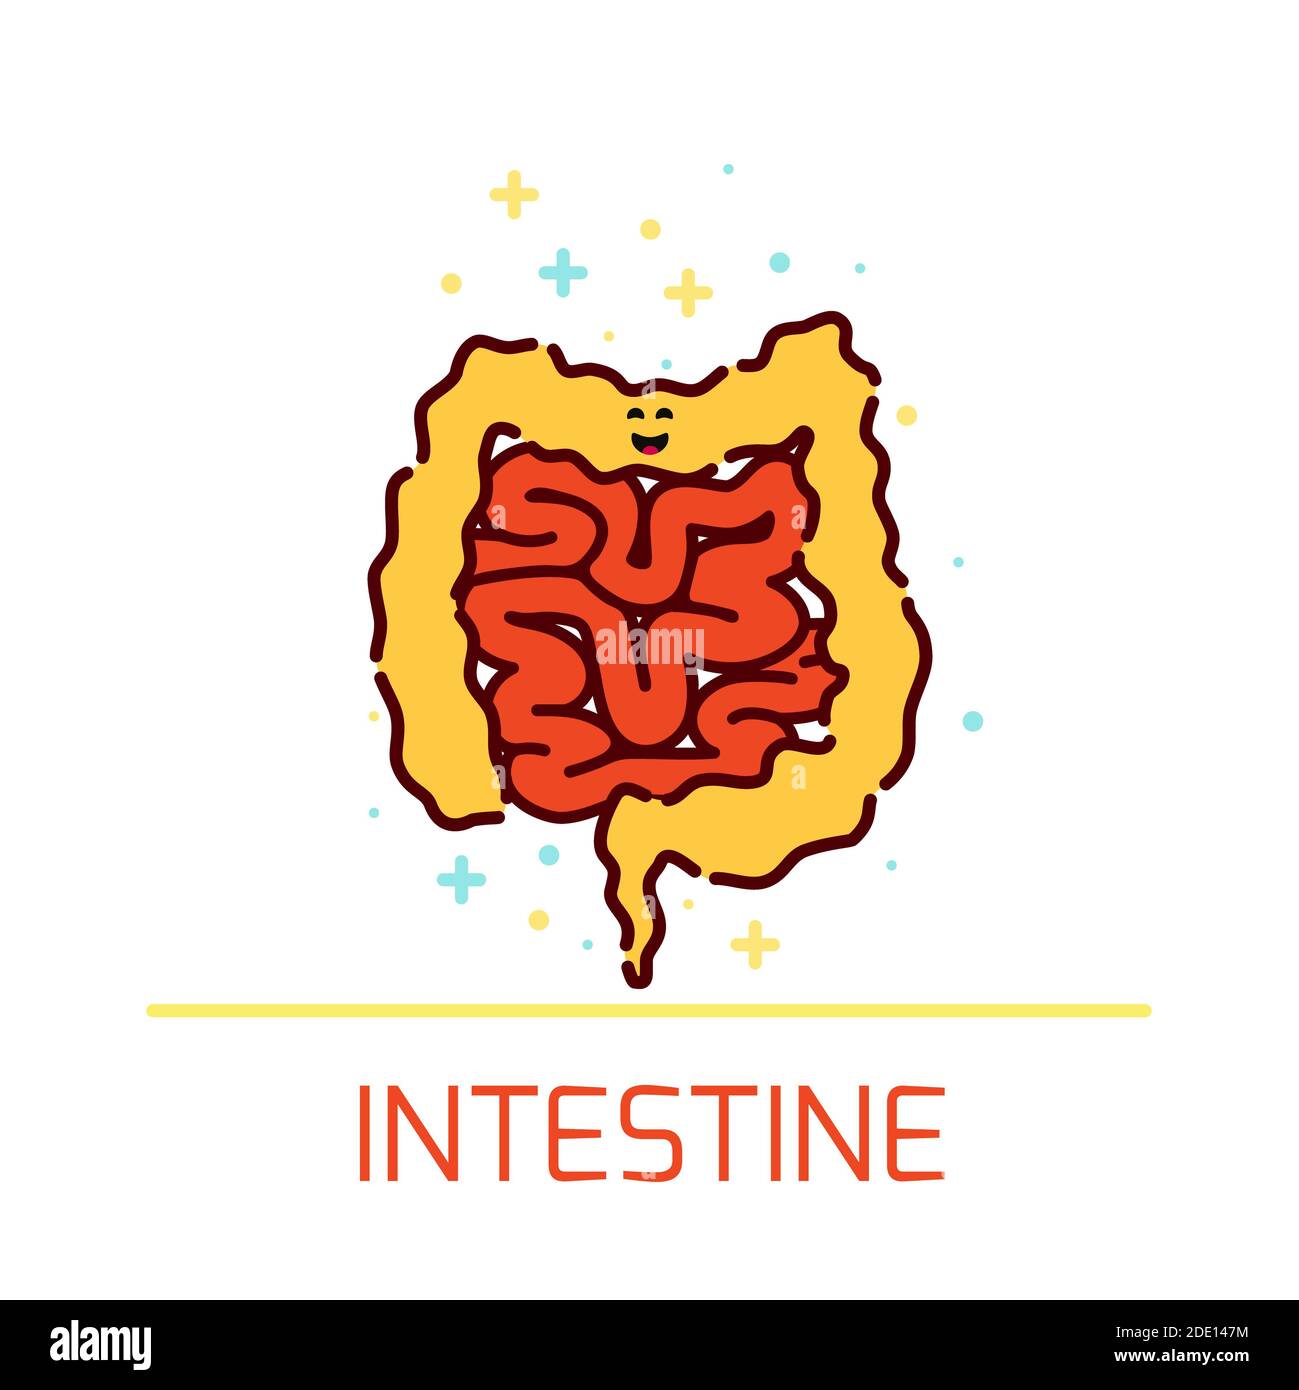 Intestines, illustration Stock Photo